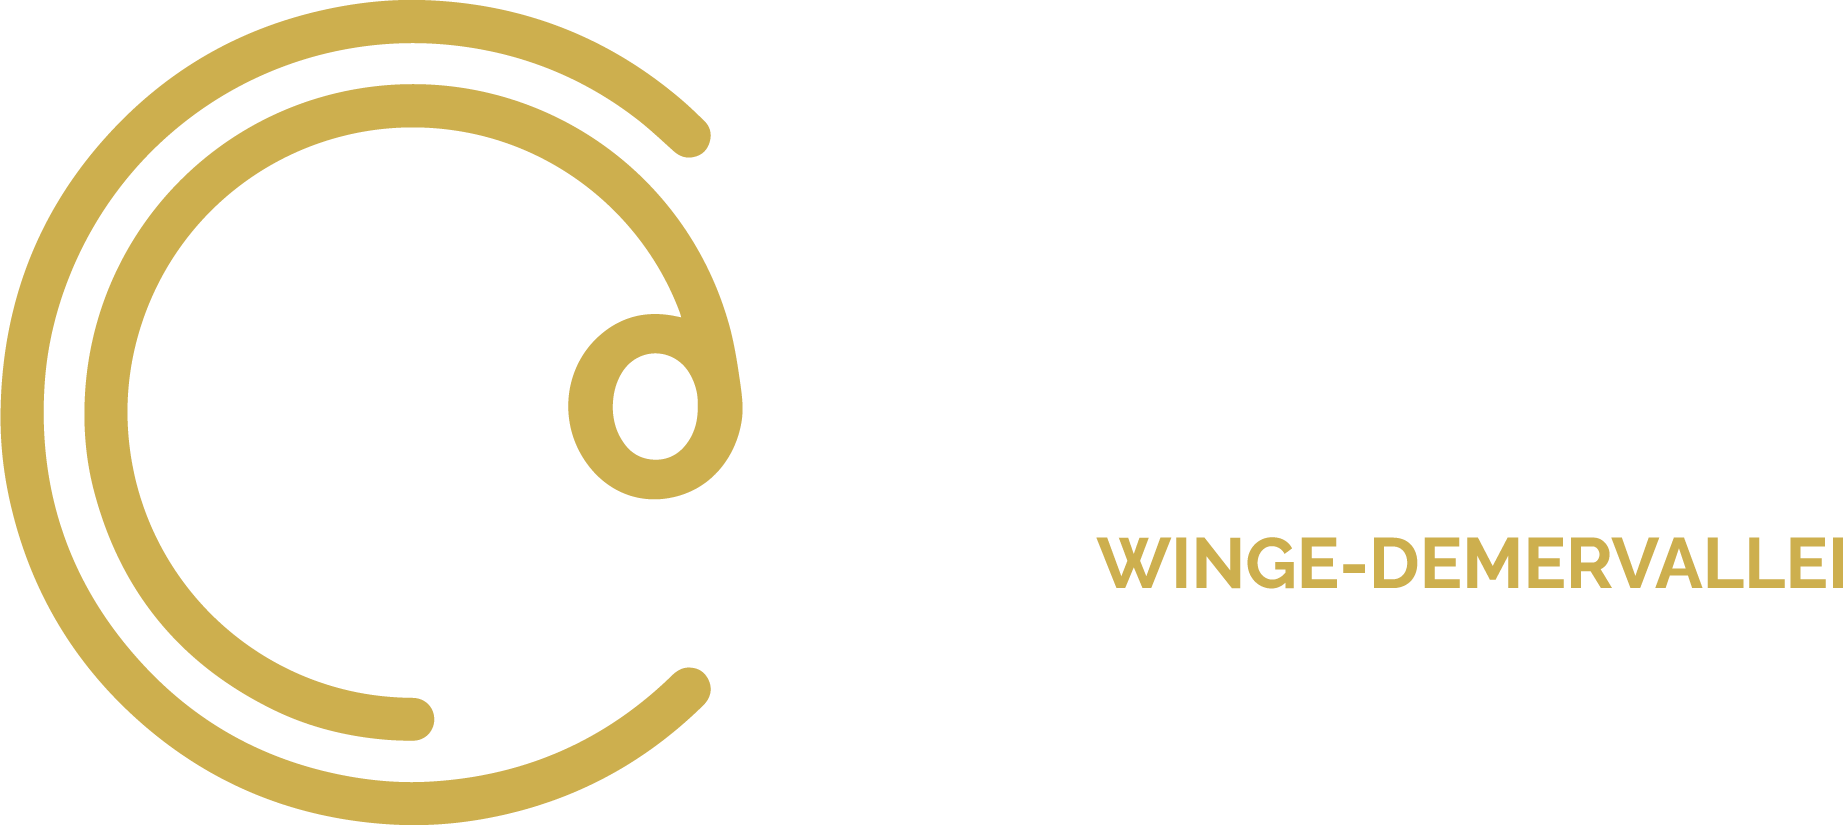 Sportregio Winge-Demervallei